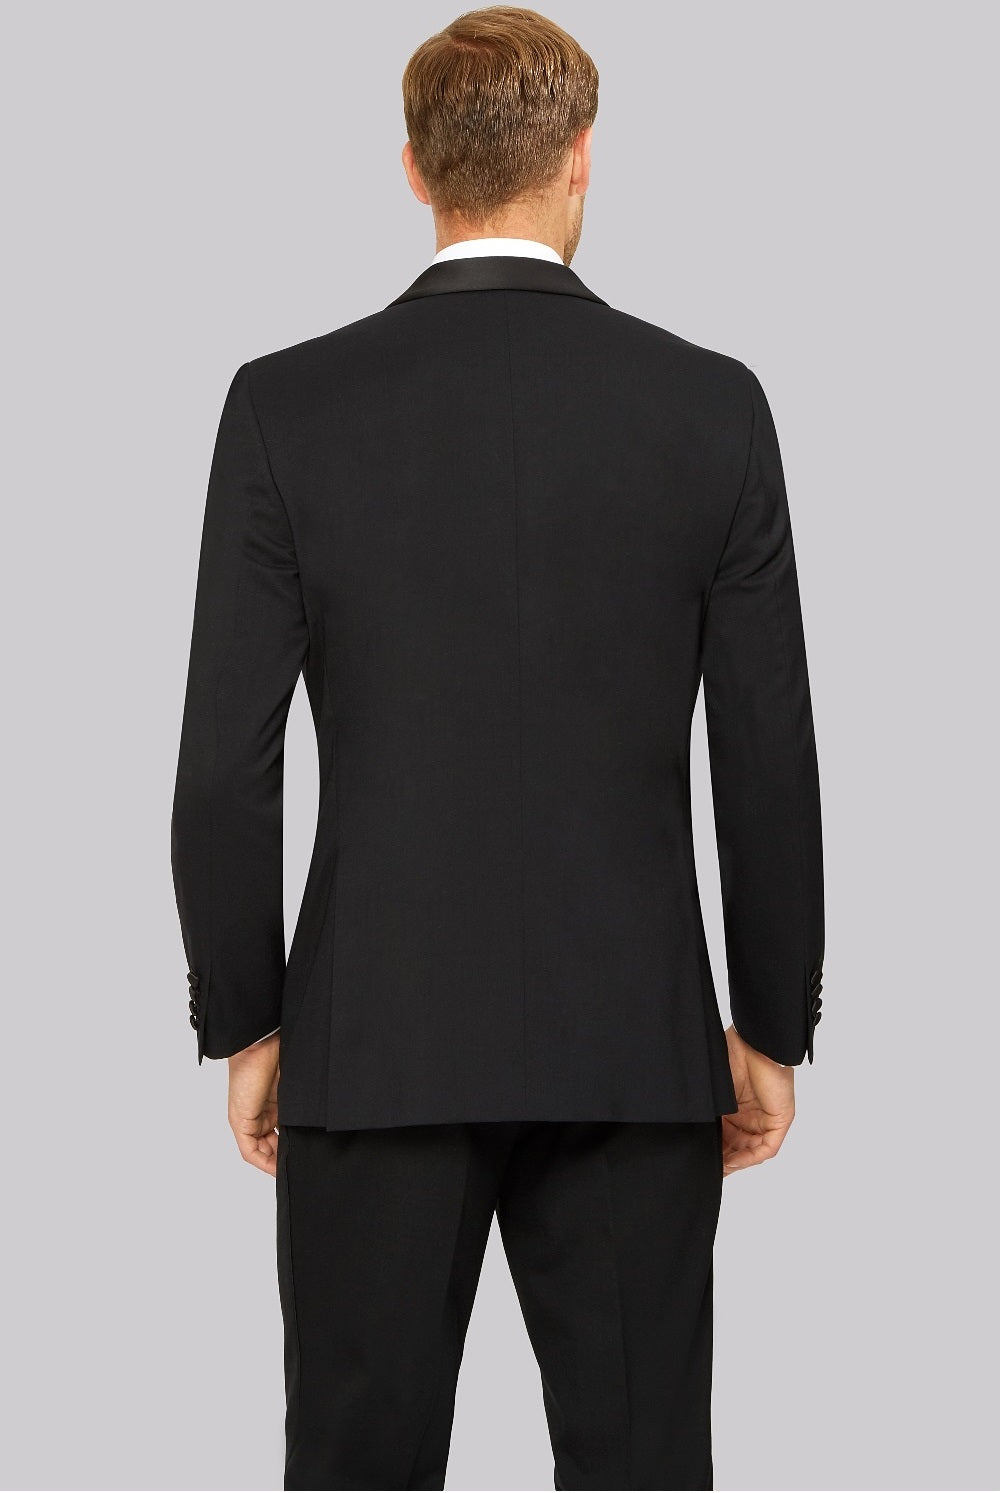 Classic Shawl Collar Suit in Black - Classique Formalwear Brisbane